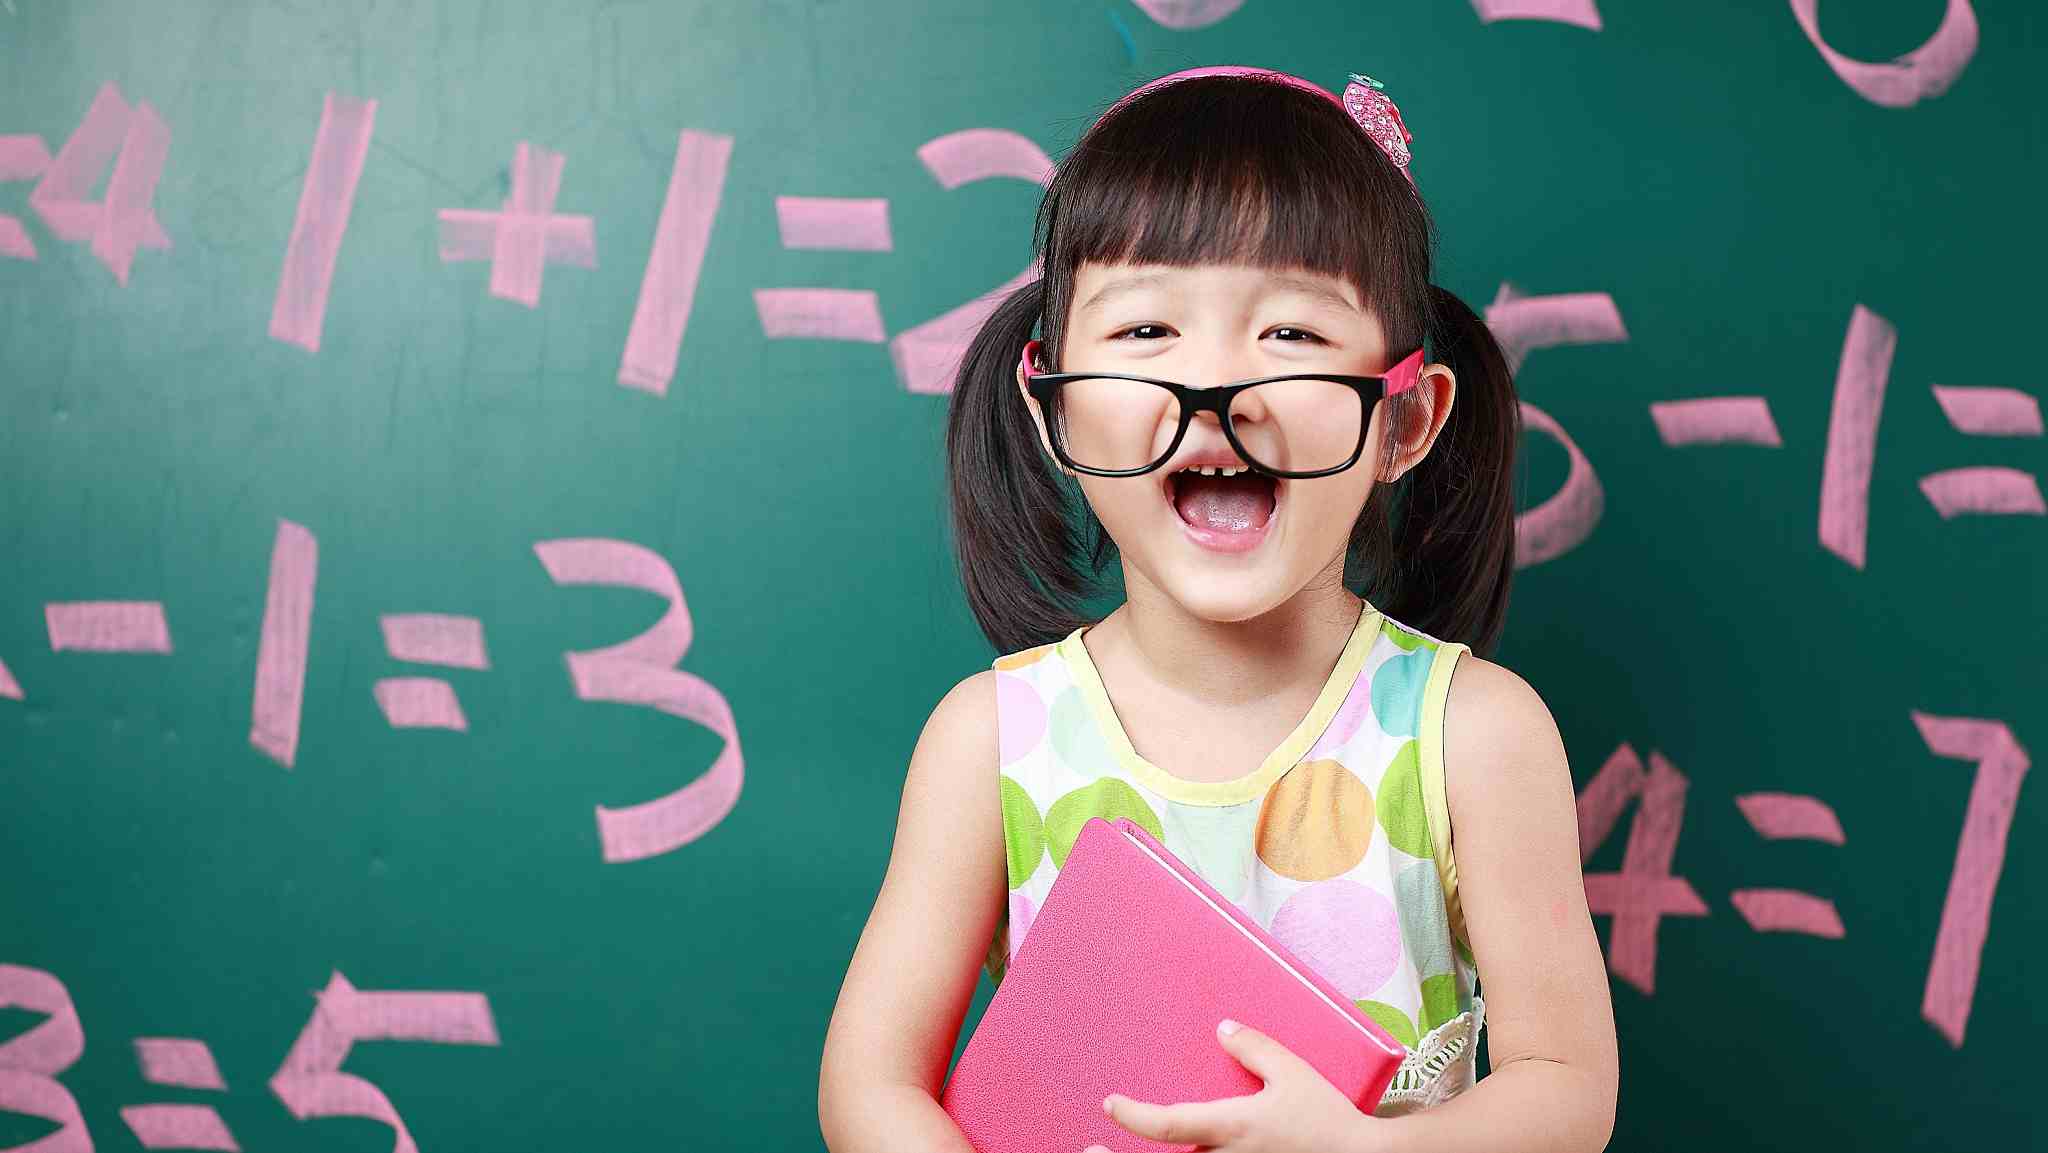 Mastering mathematics. Дети Билингвы. Азиатские дети учатся. Математика дети аз Аты. Детский билингвизм.